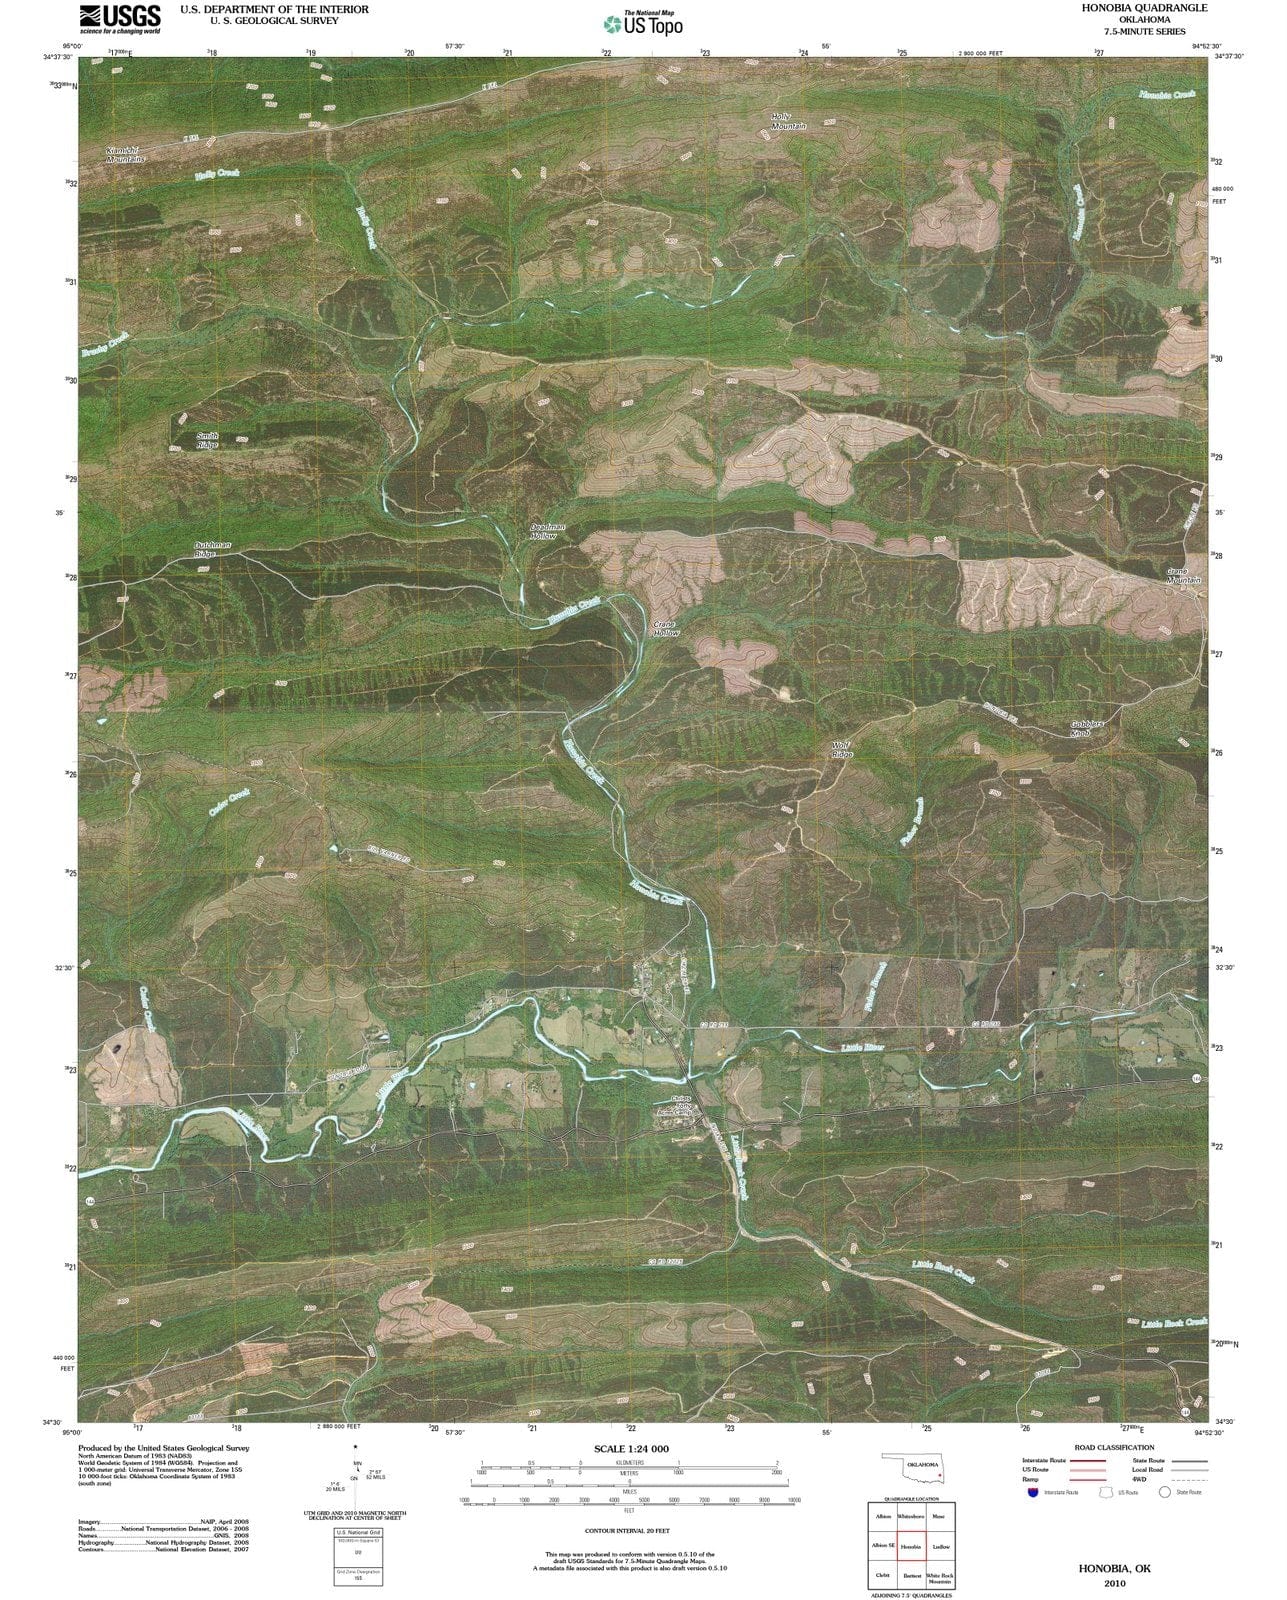 2010 Honobia, OK - Oklahoma - USGS Topographic Map